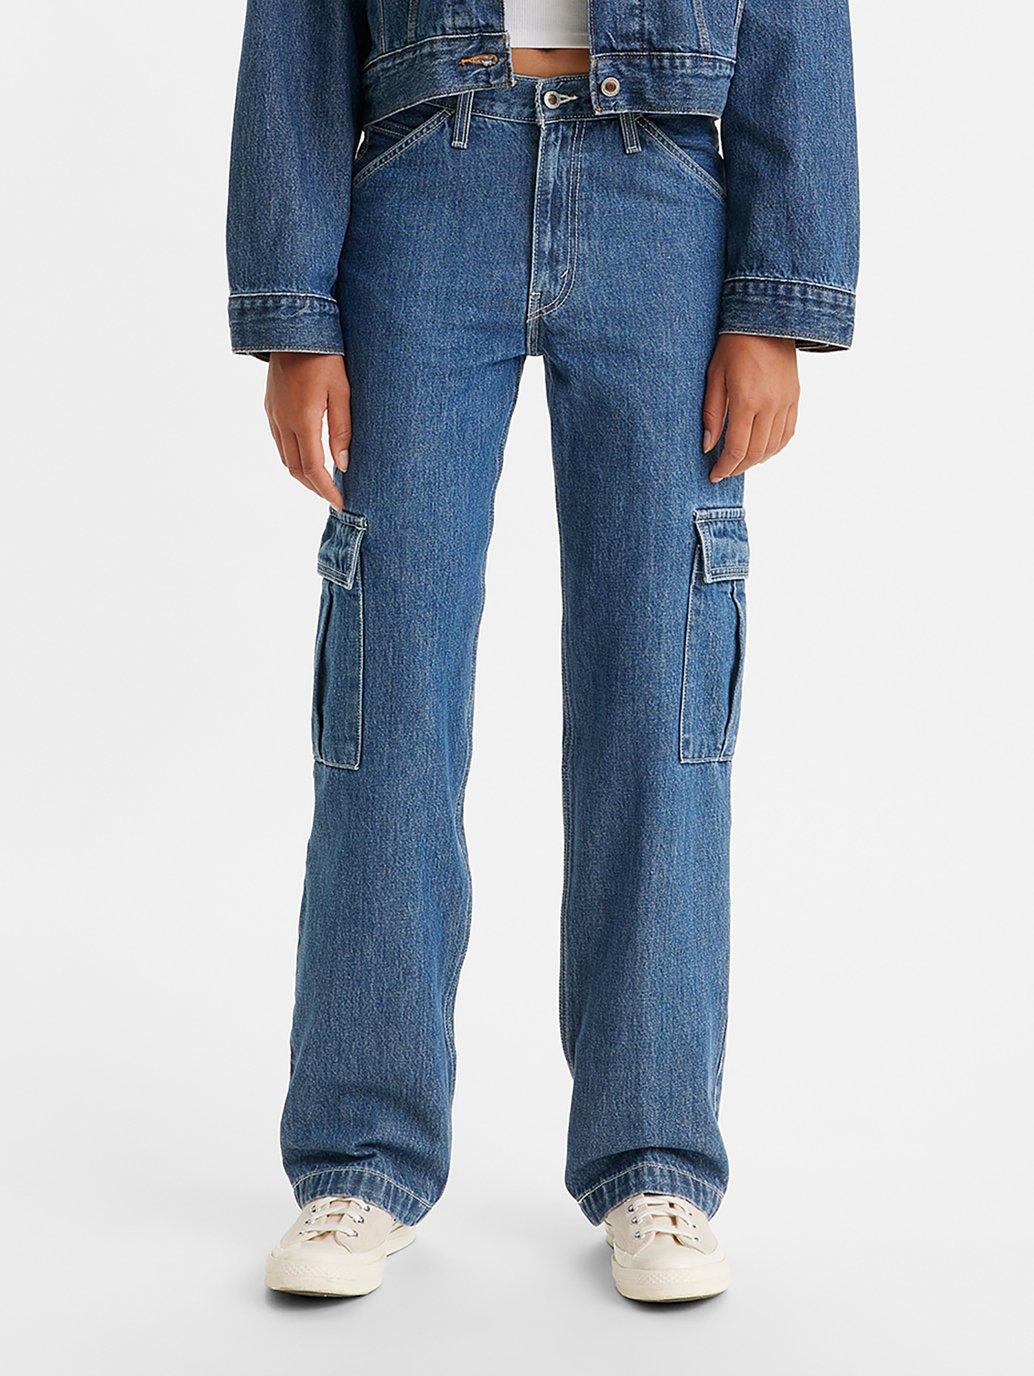 Introducir 66+ imagen levi’s cargo jeans womens